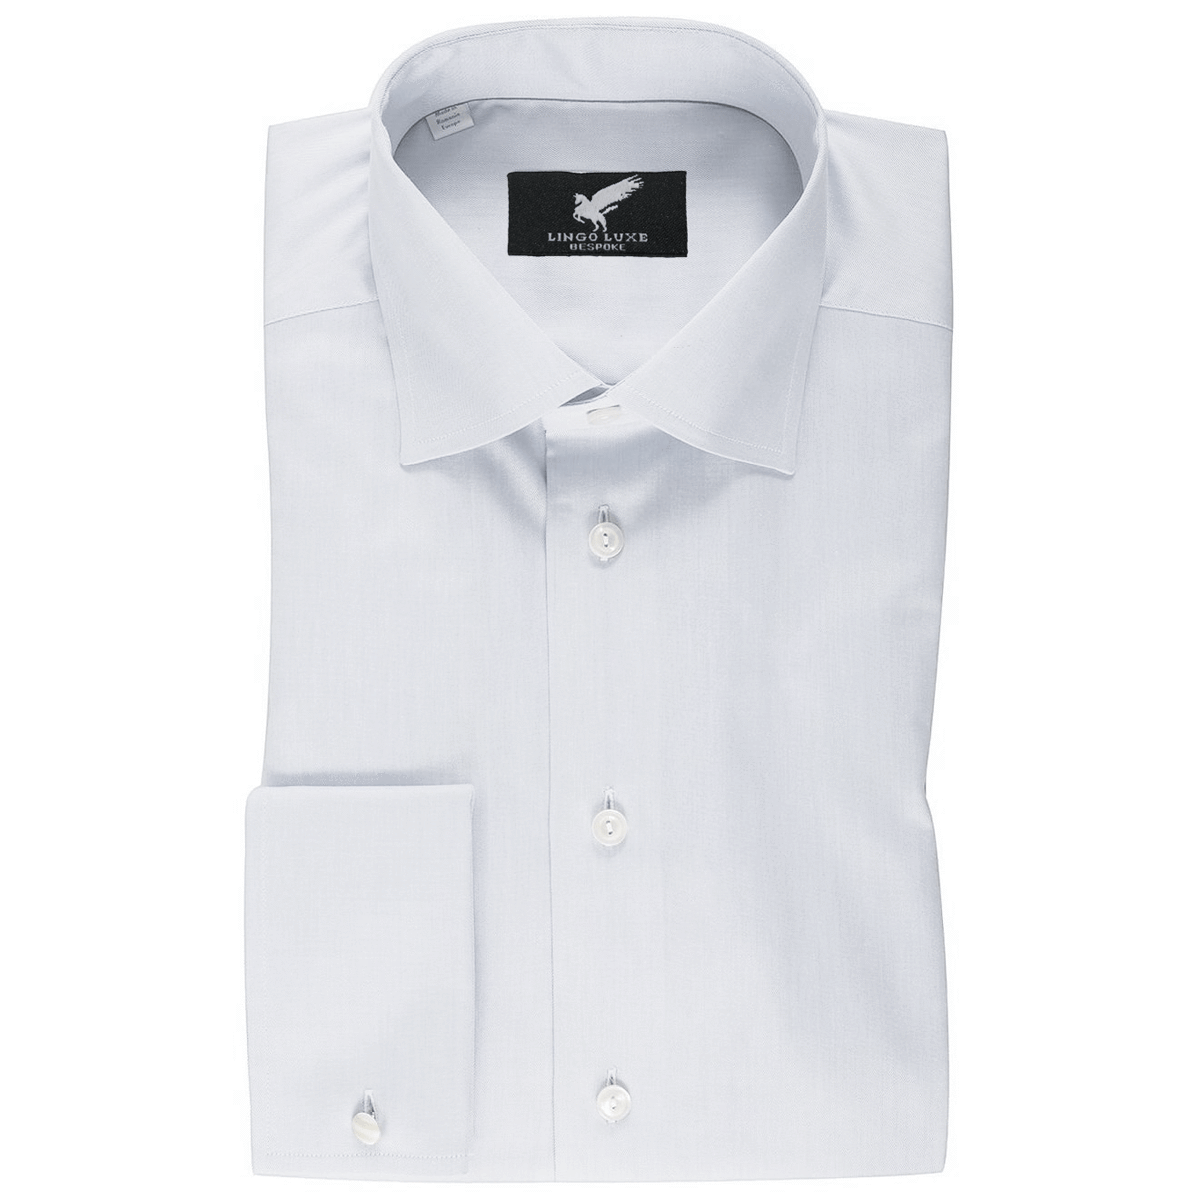 Men's Business Basics Shirt | Lingo Luxe White-Lingo Luxe Bespoke